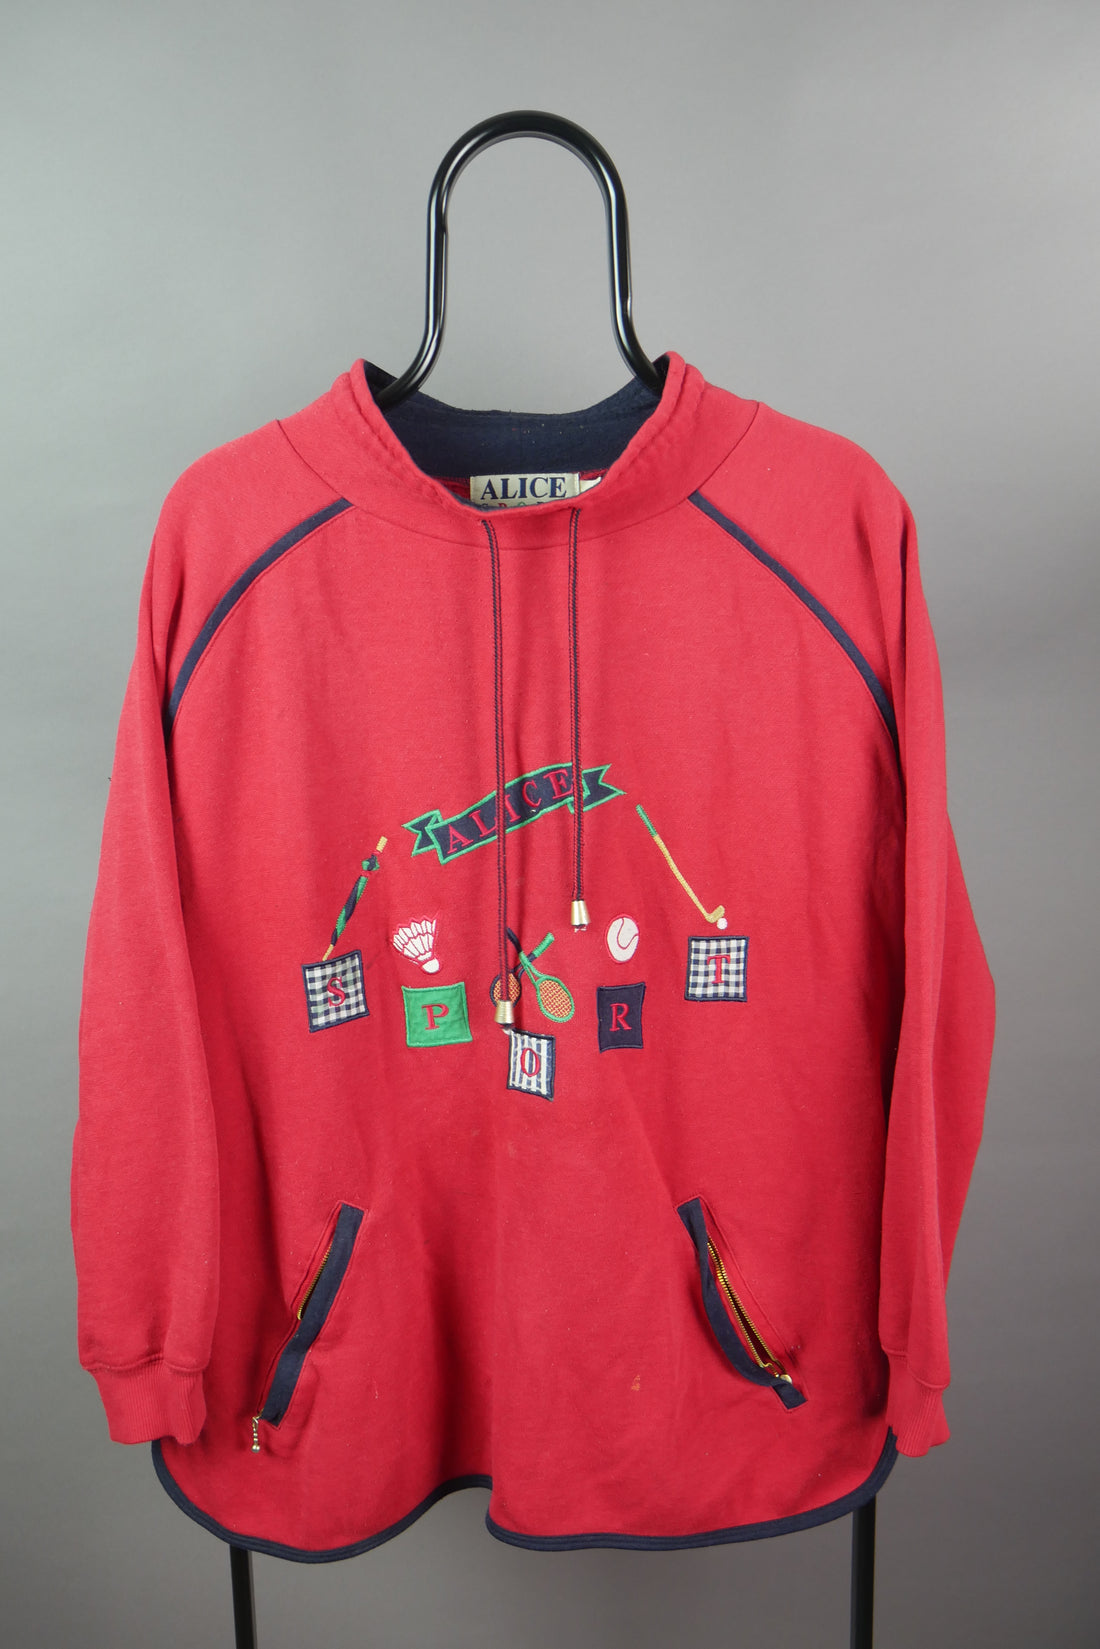 The Vintage Alice Sports Sweatshirt (L)